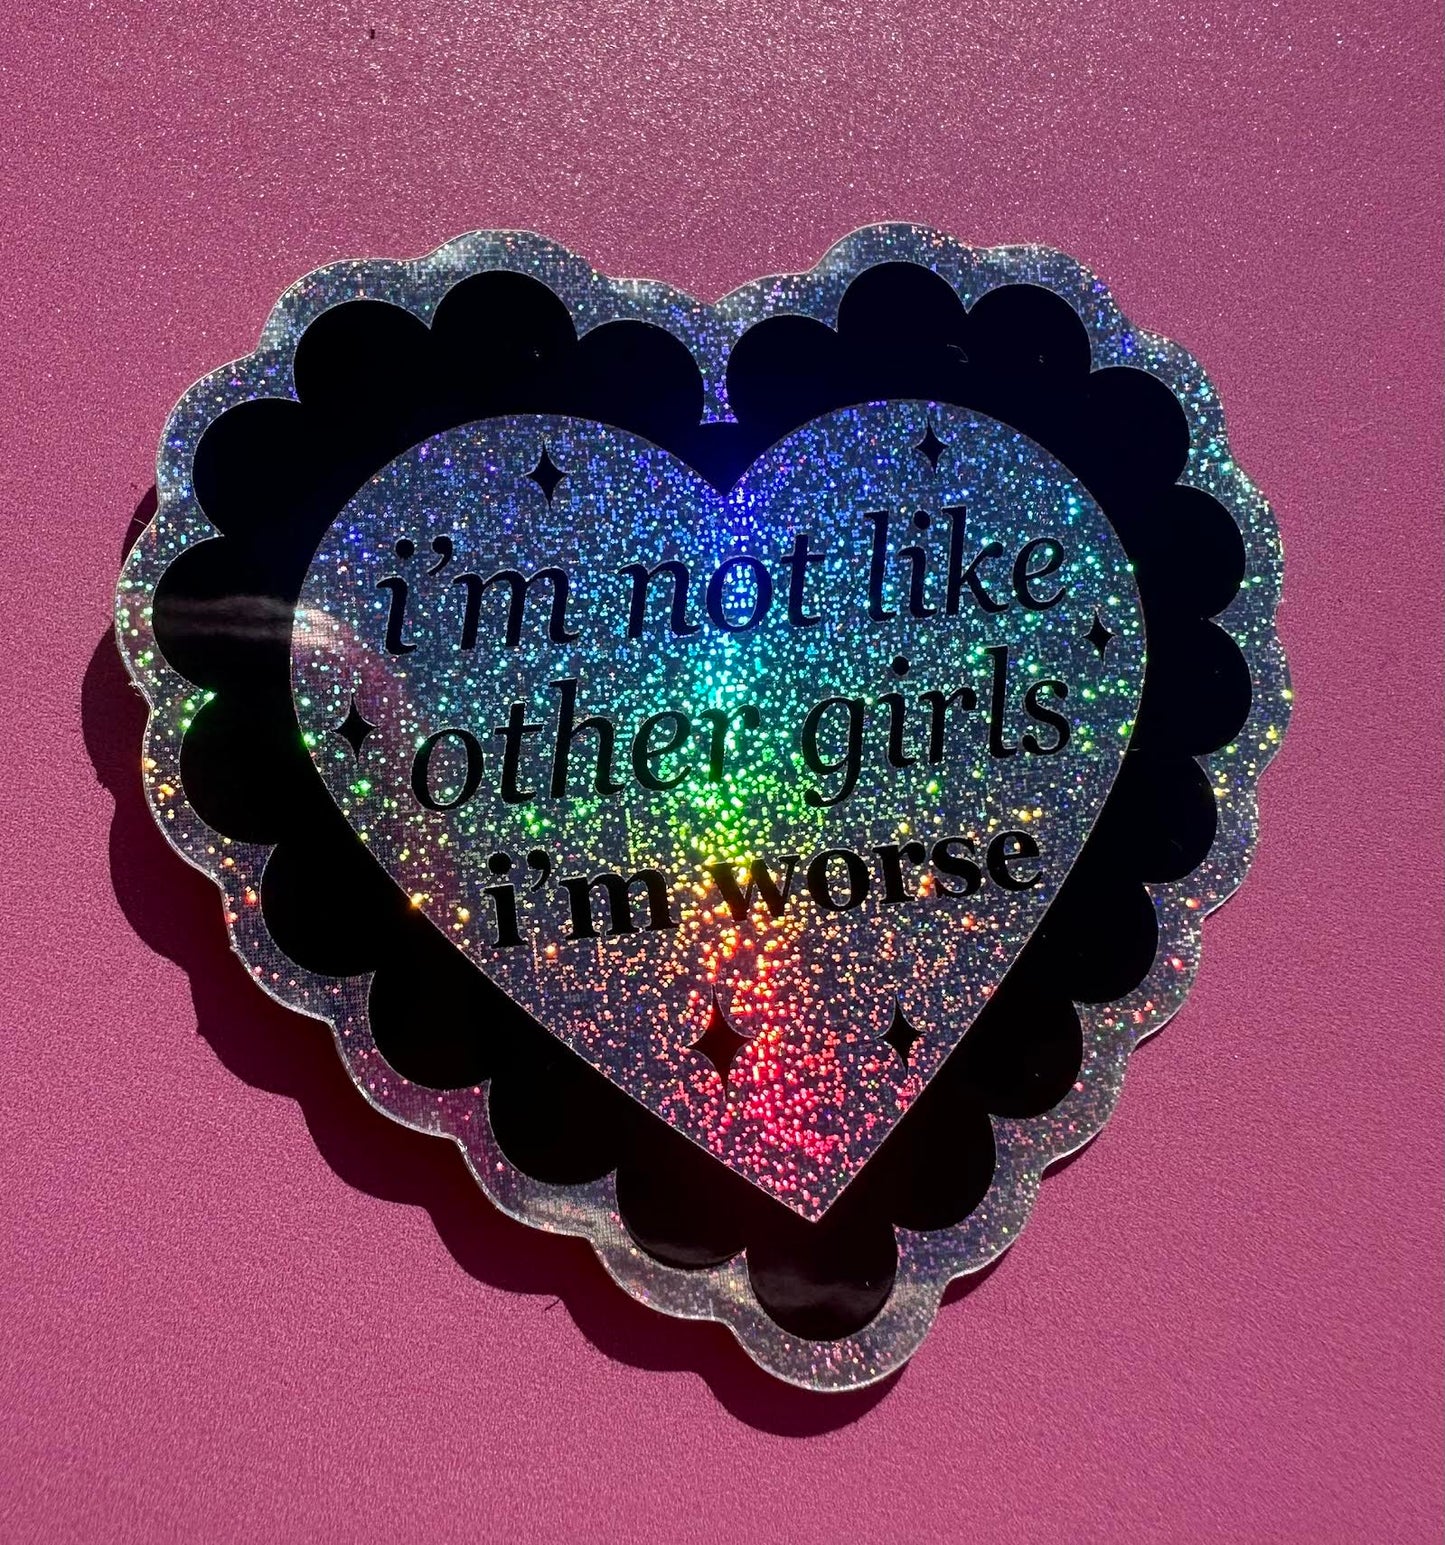 I'm Not Like Other Girls I'm Worse Glitter Sticker